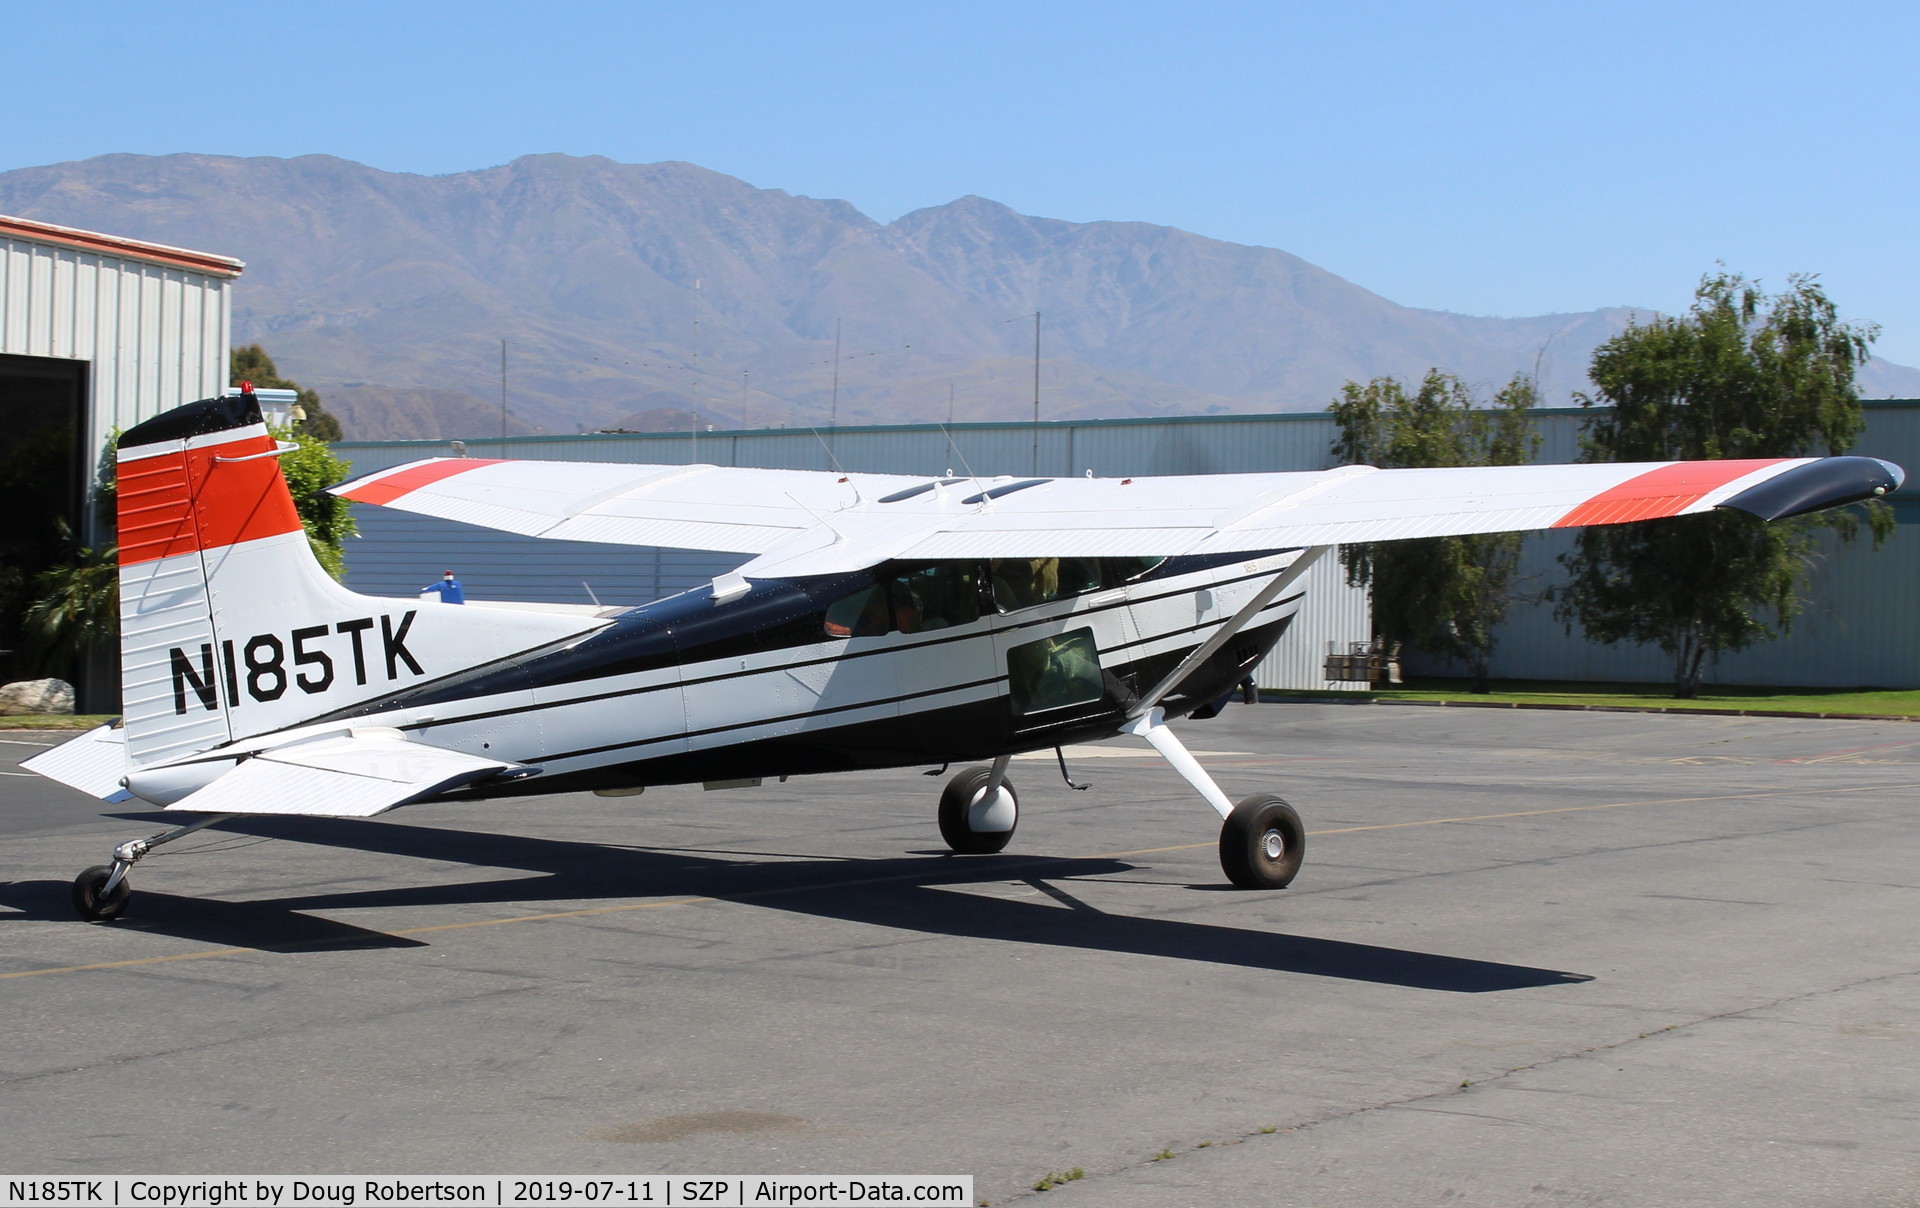 N185TK, 1981 Cessna A185F Skywagon 185 C/N 18504366, 1981 Cessna A185F SKYWAGON II, Continental IO-520D 300 Hp, taxi